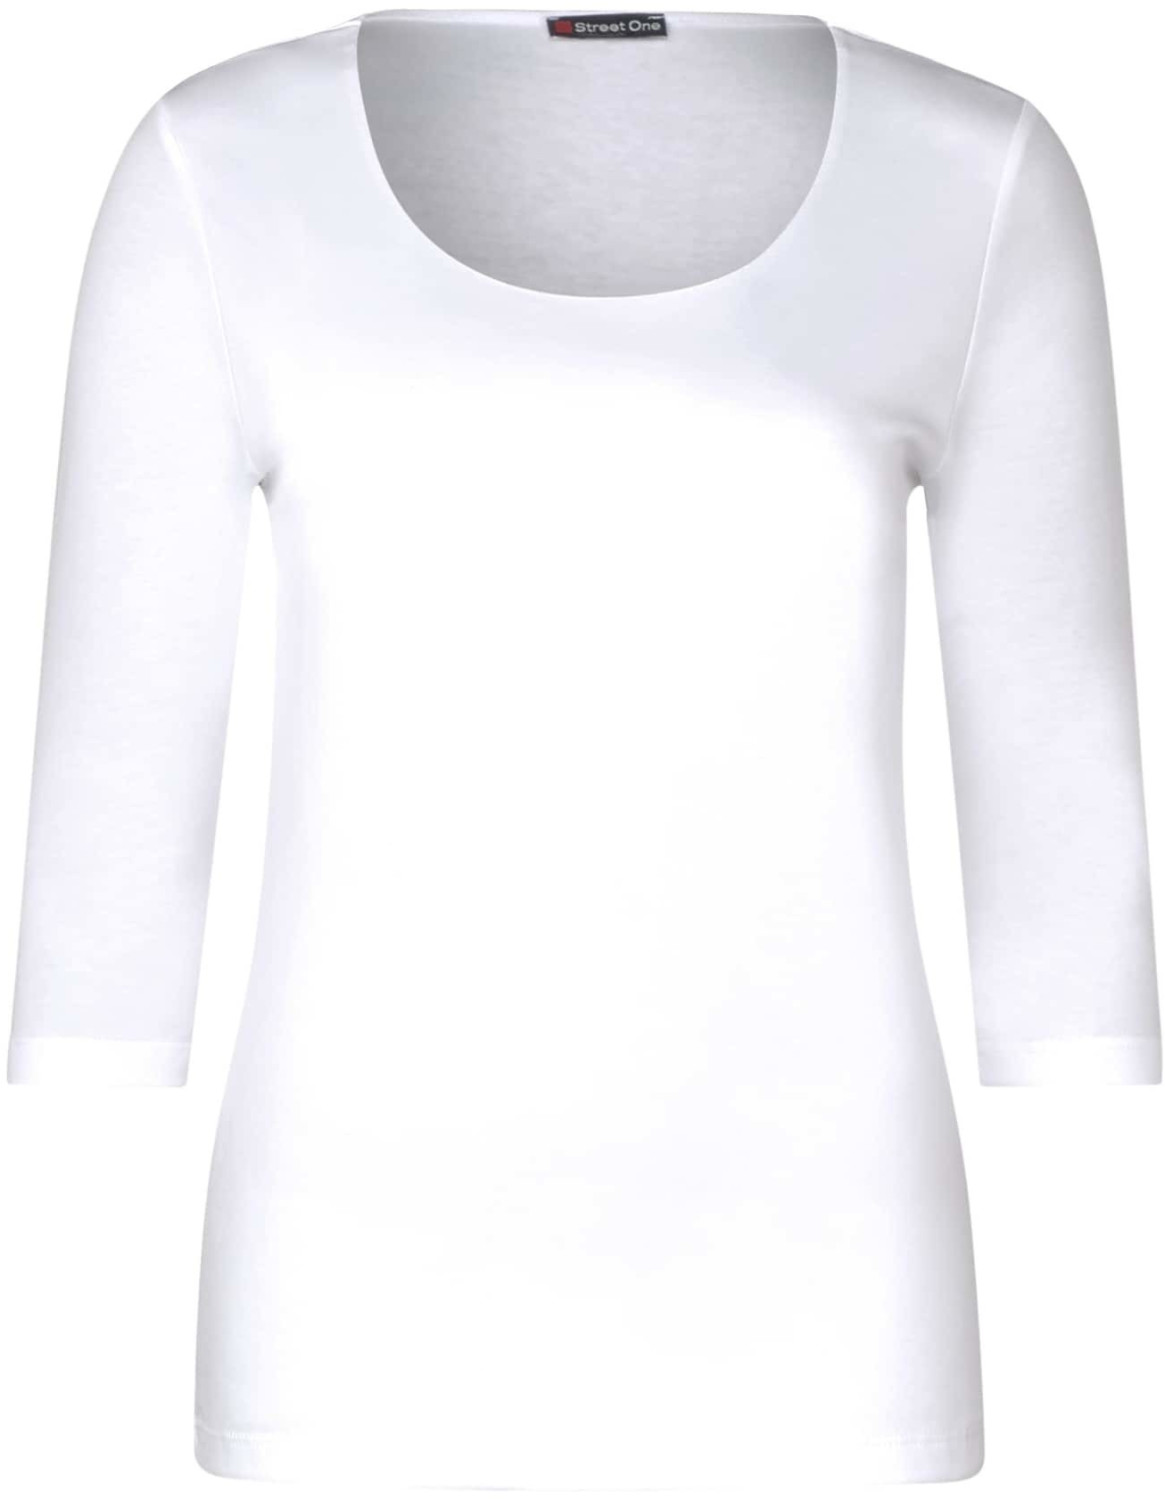 Street ab | € Preisvergleich Basic Shirt One Pania white bei 17,96 (A313977)